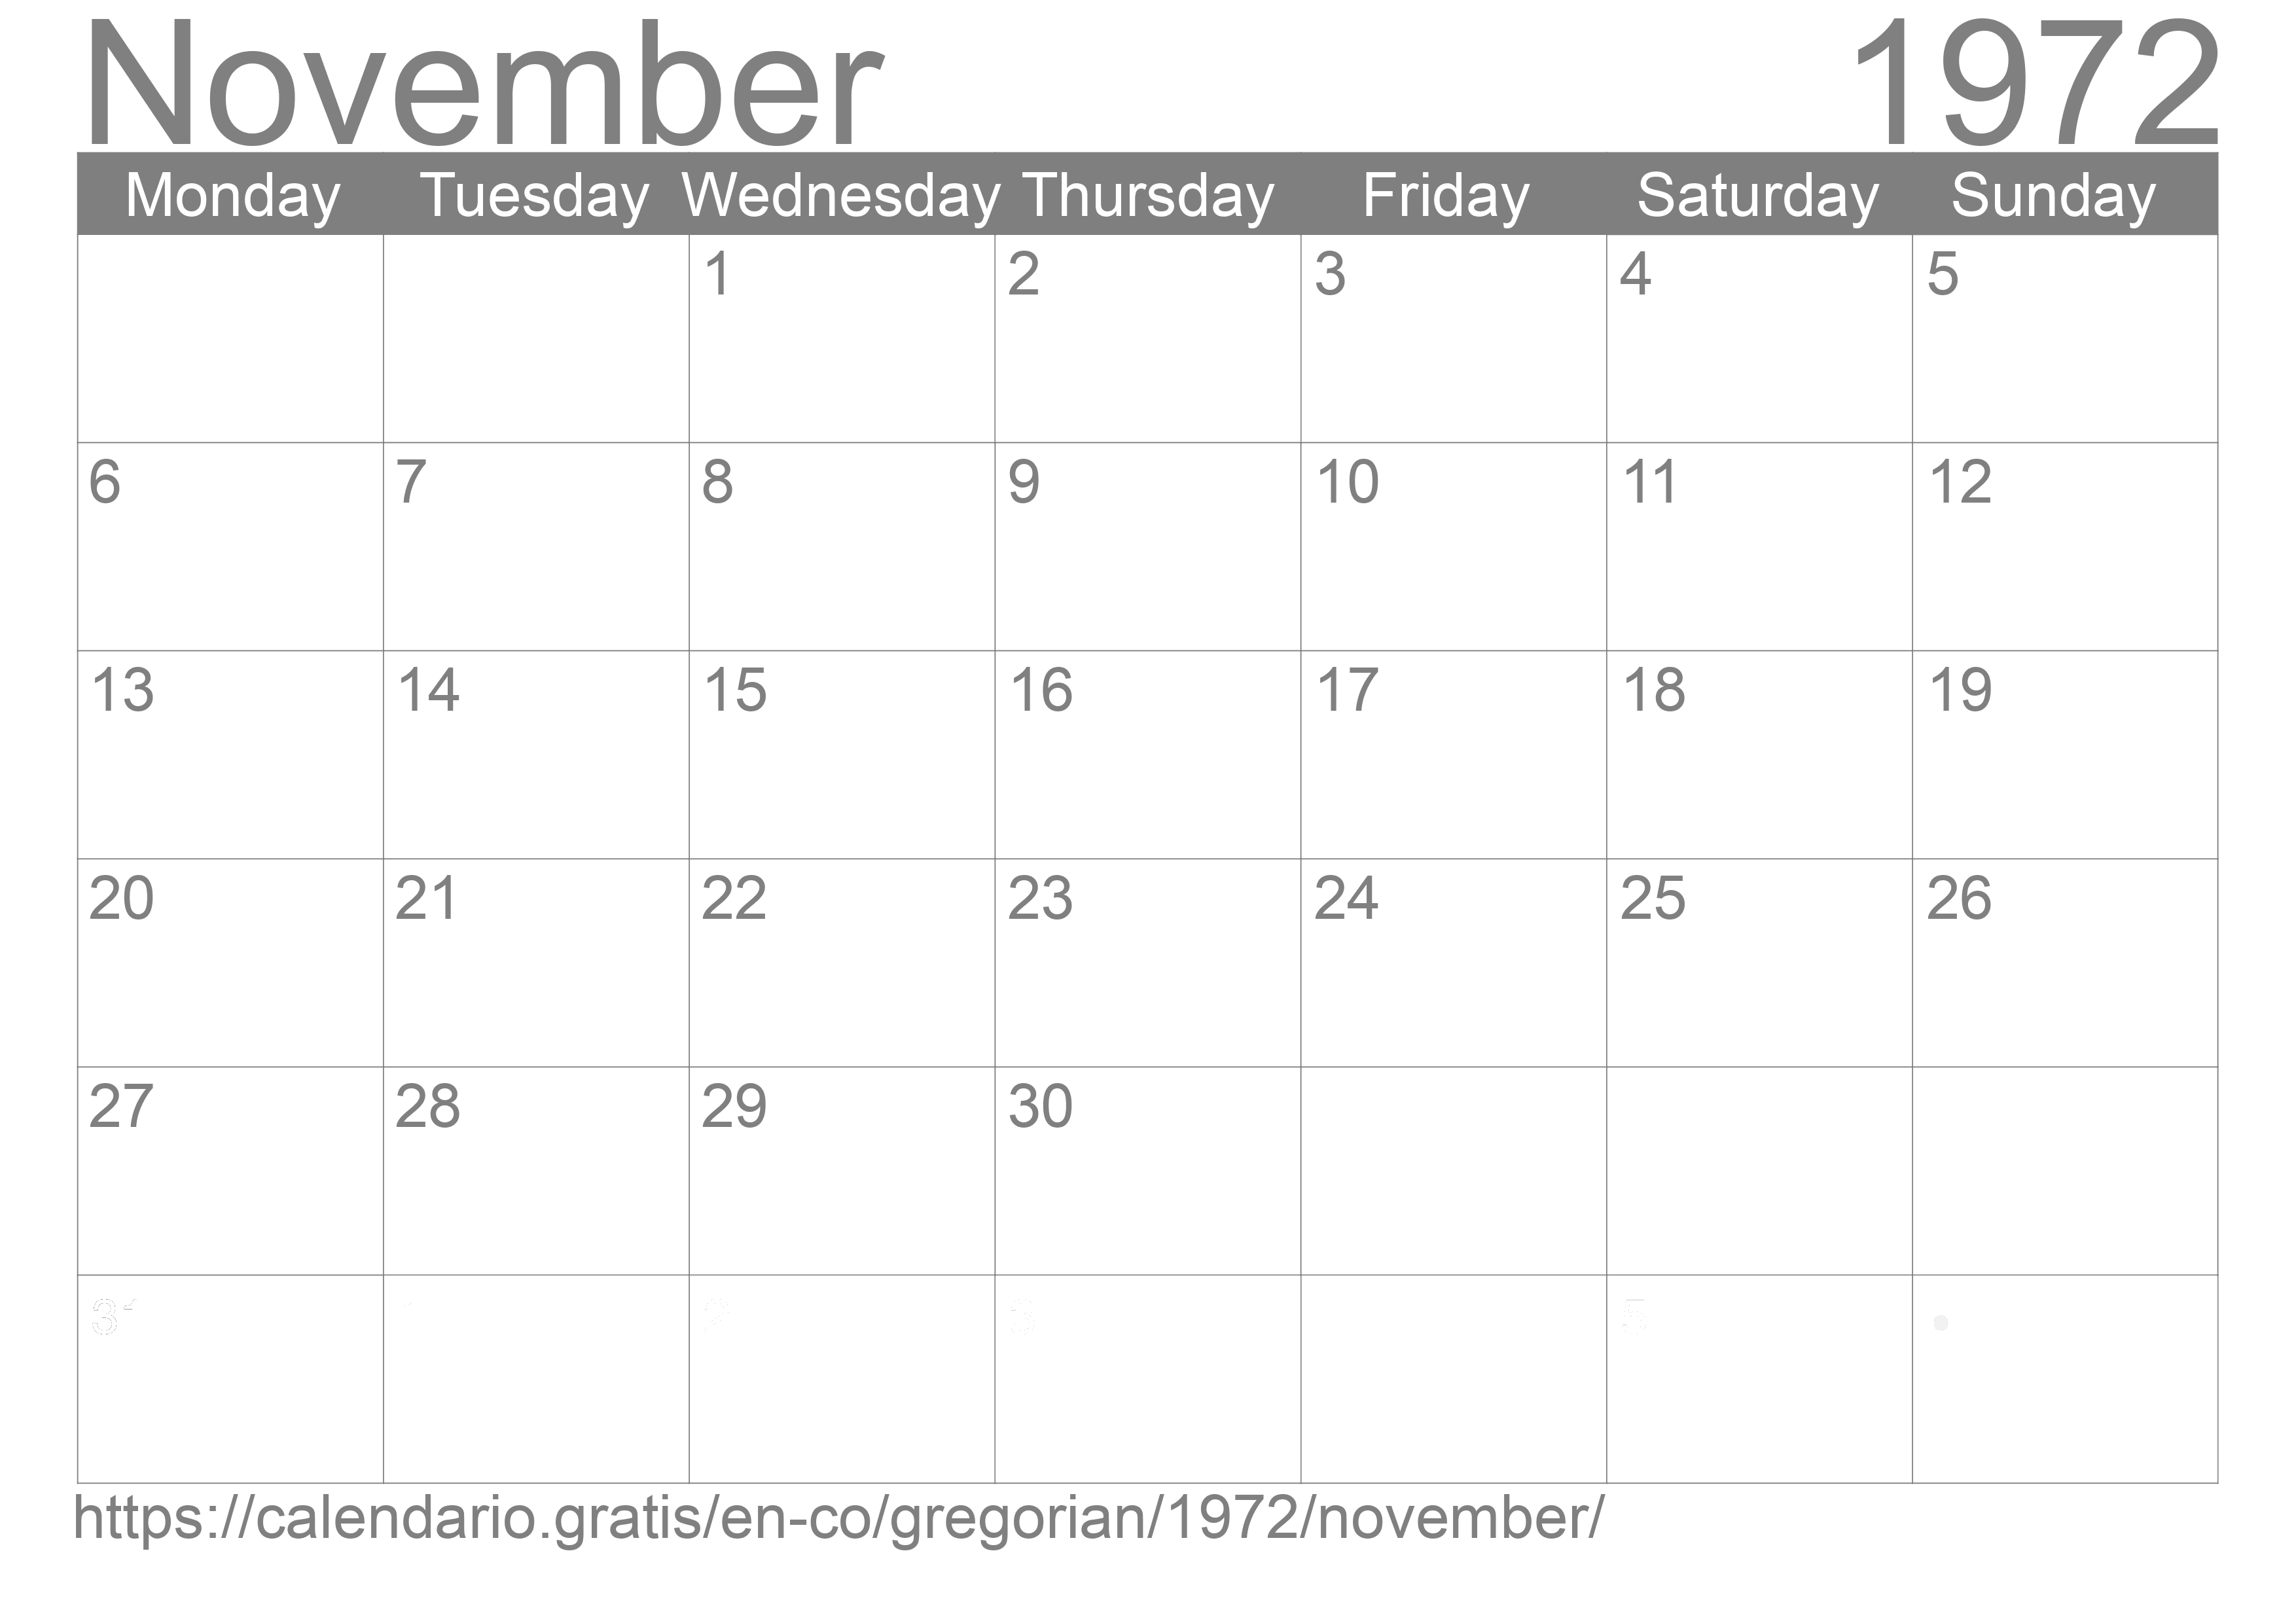 Calendar November 1972 to print